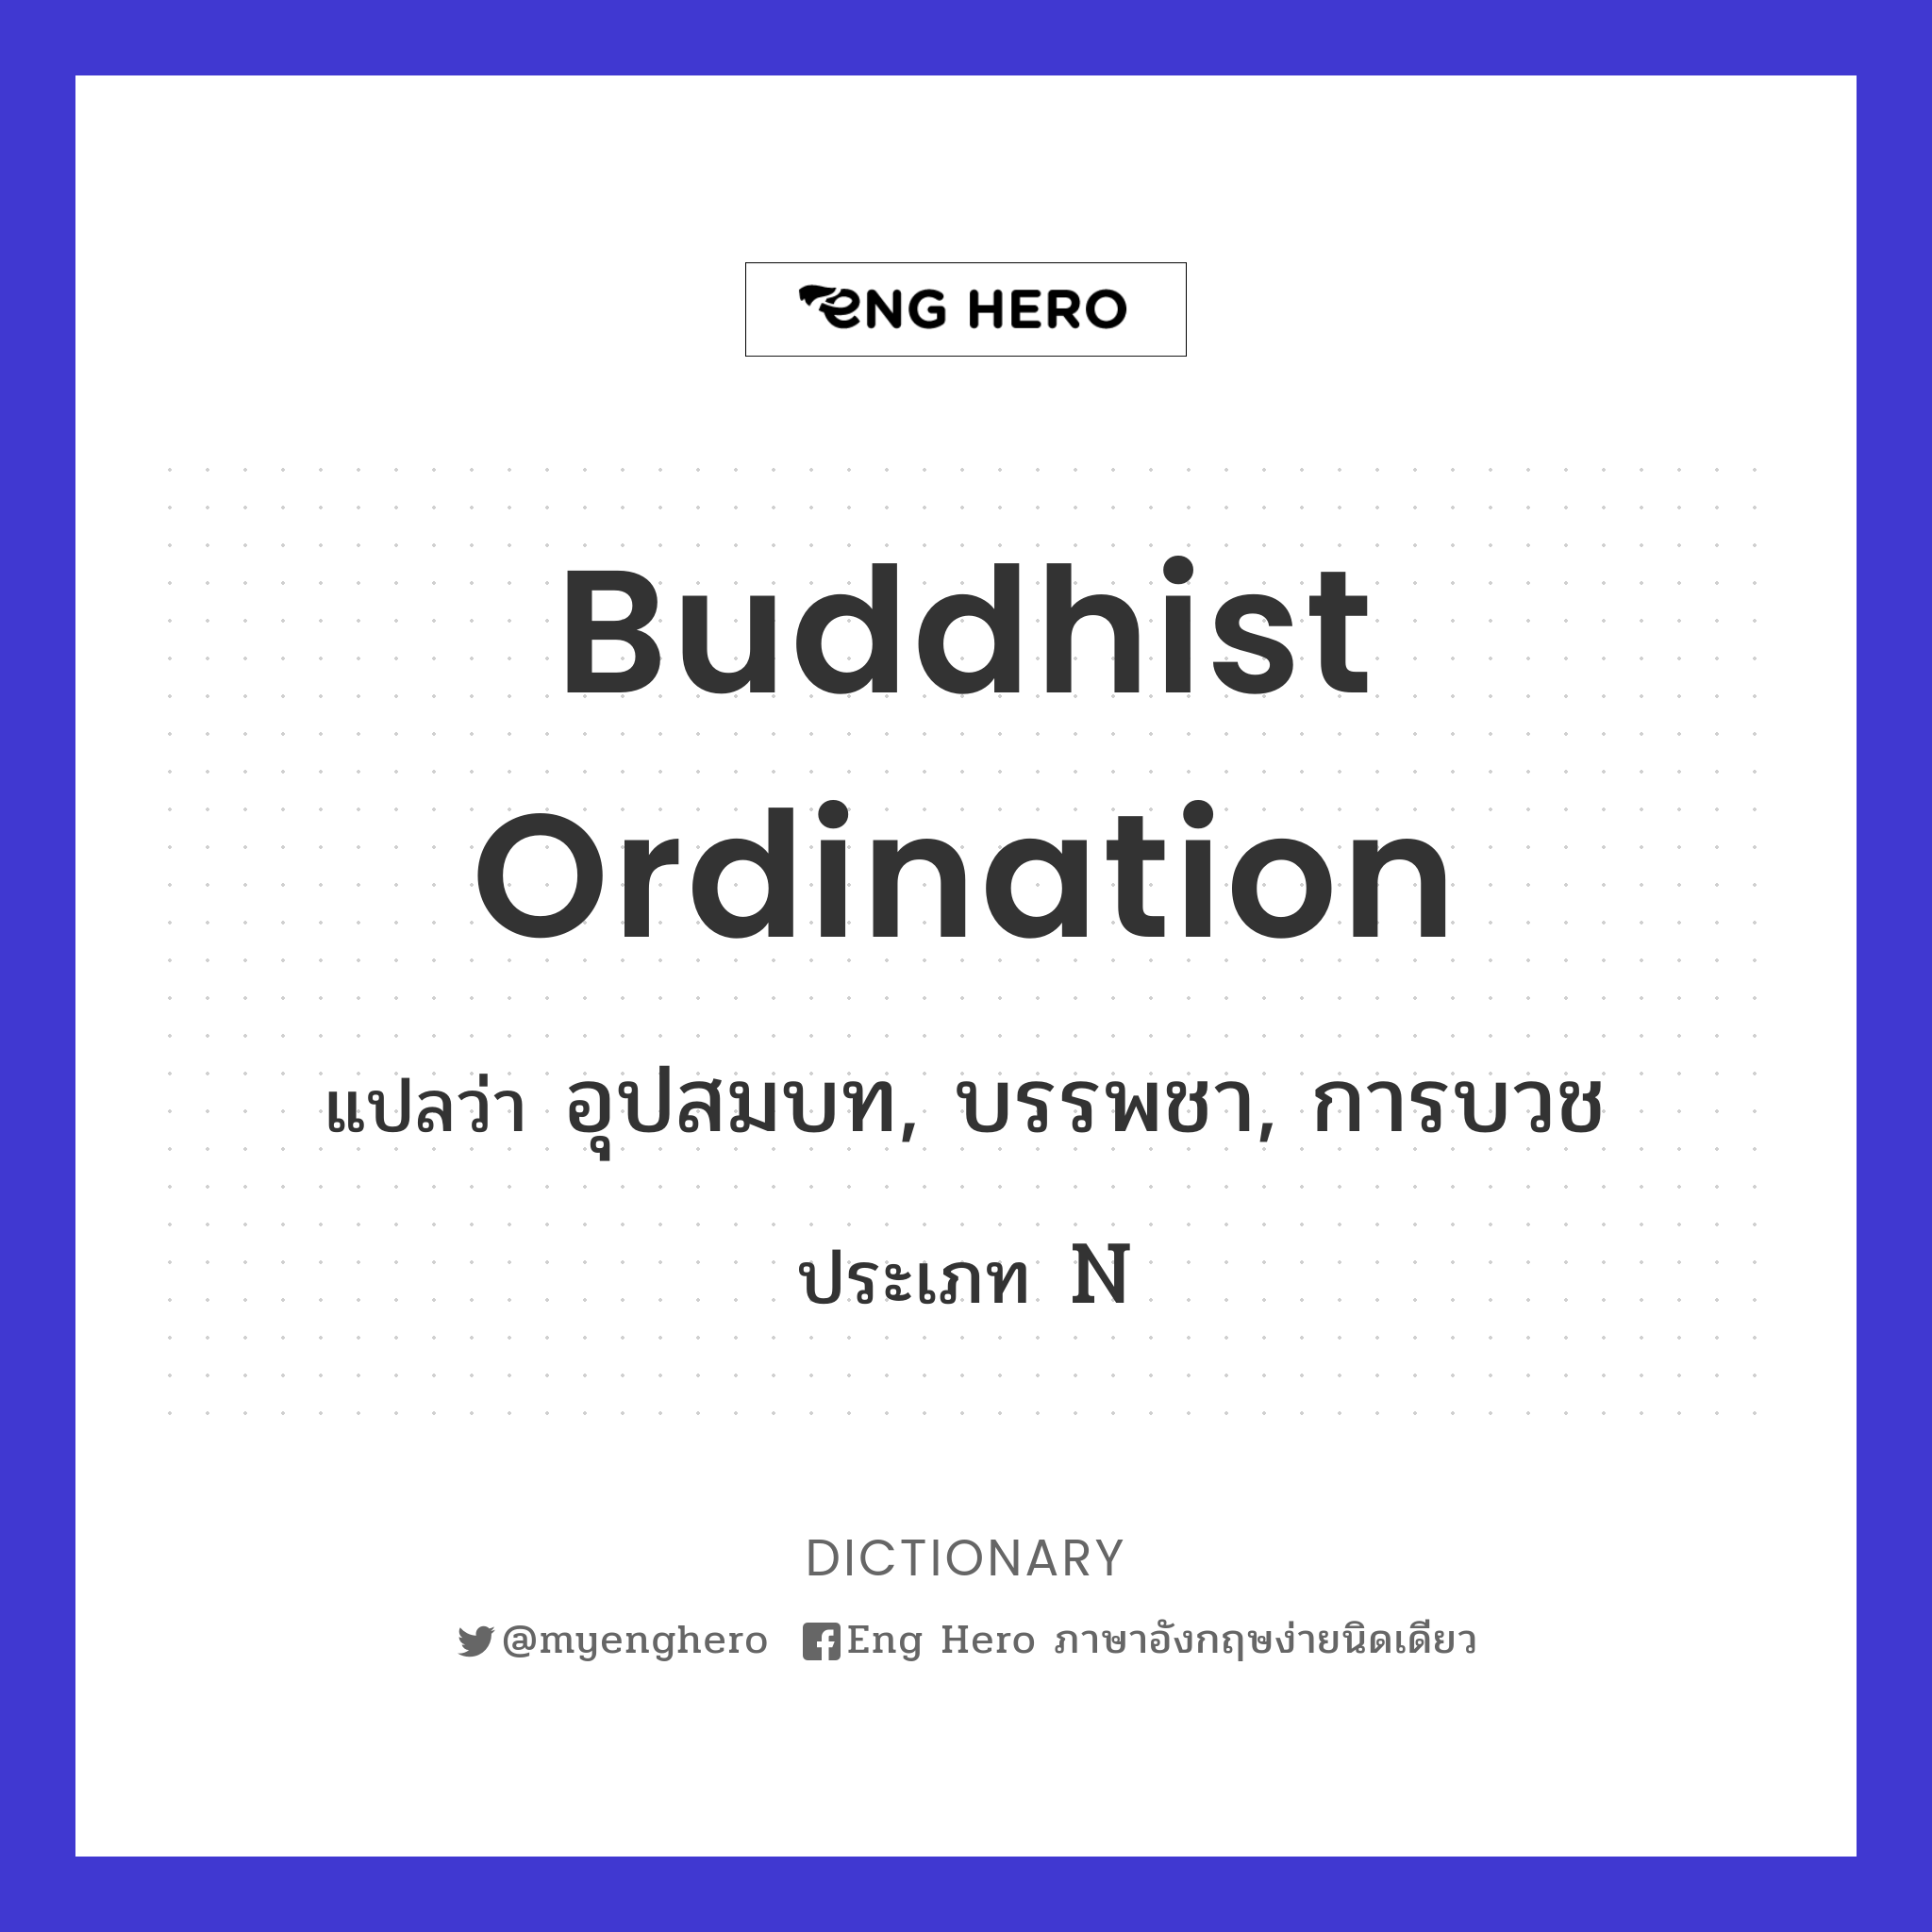 Buddhist ordination